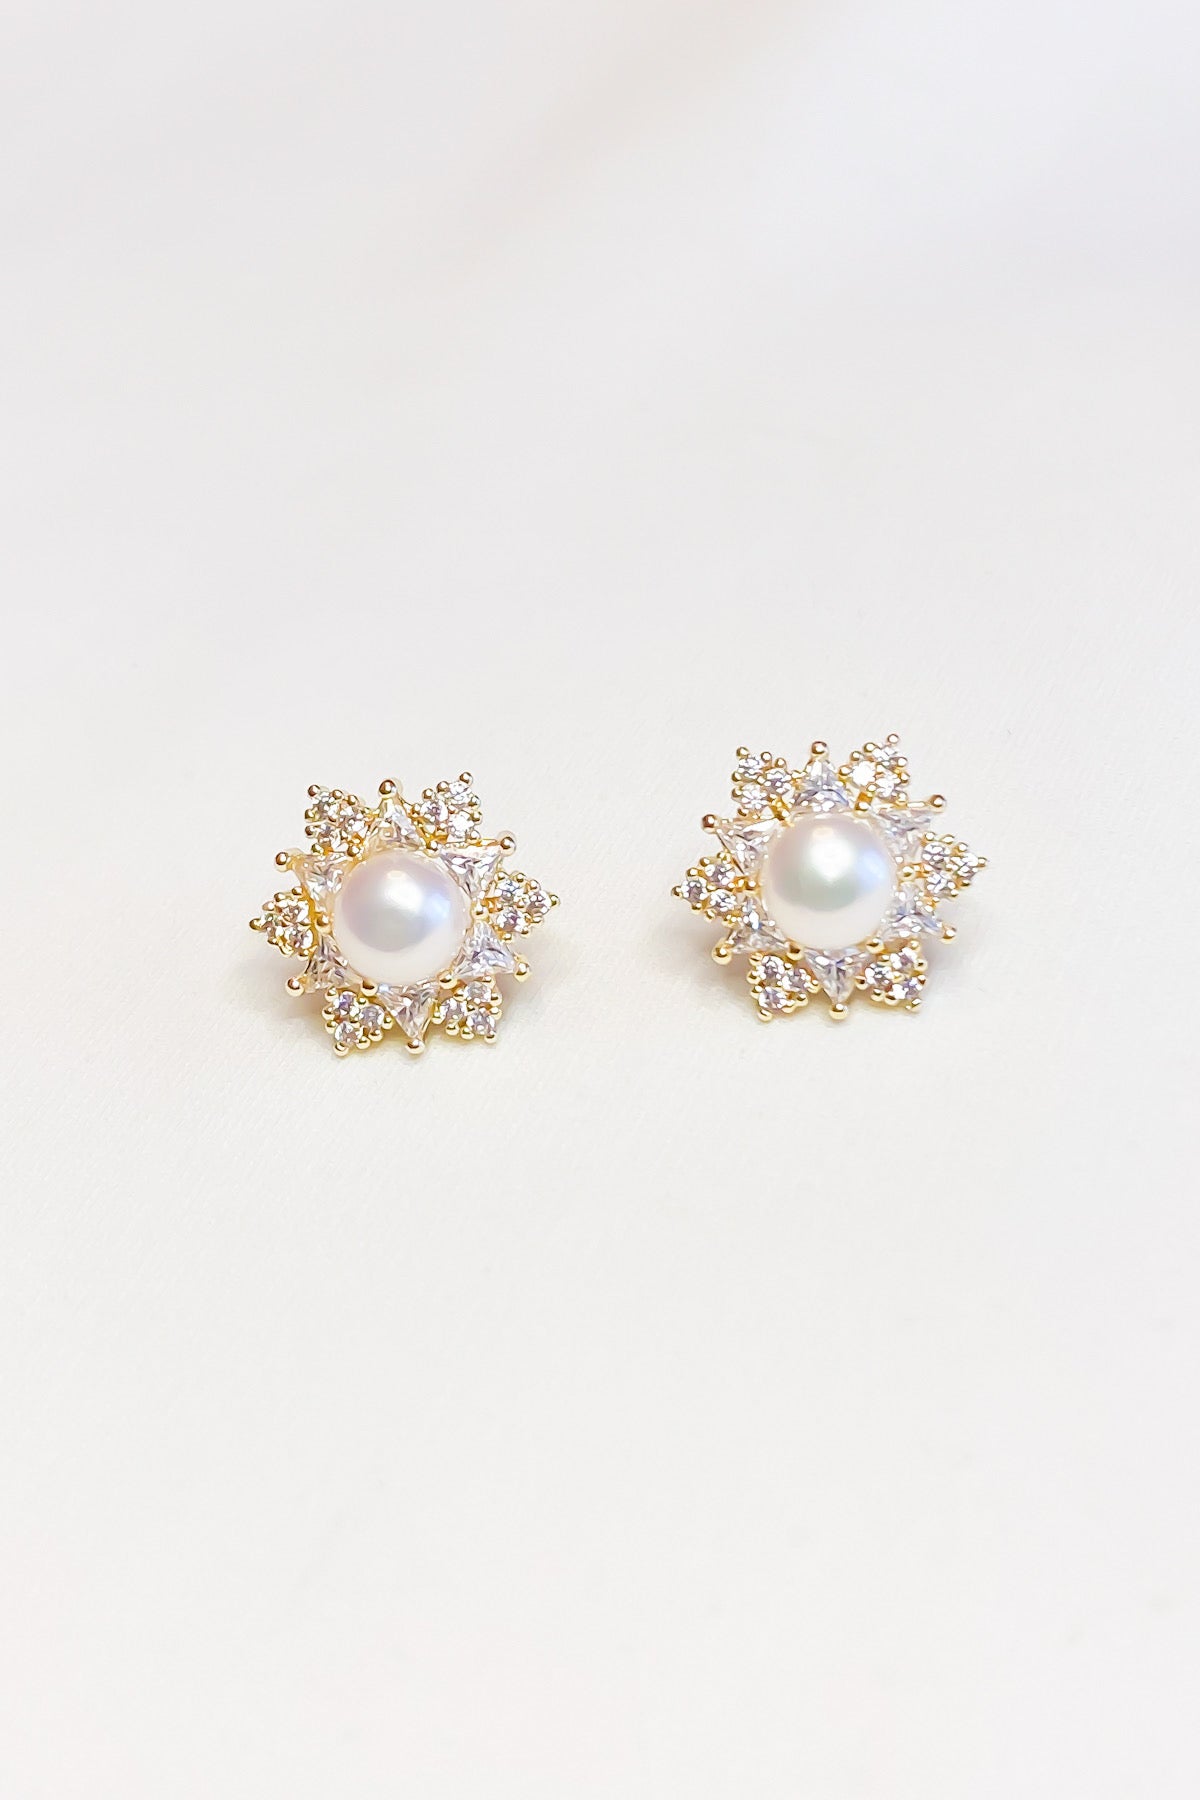 SKYE San Francisco Shop Chic Modern Elegant Classy Women Jewelry French Parisian Minimalist Elisa 18K Gold Crystal Pearl Earrings 5